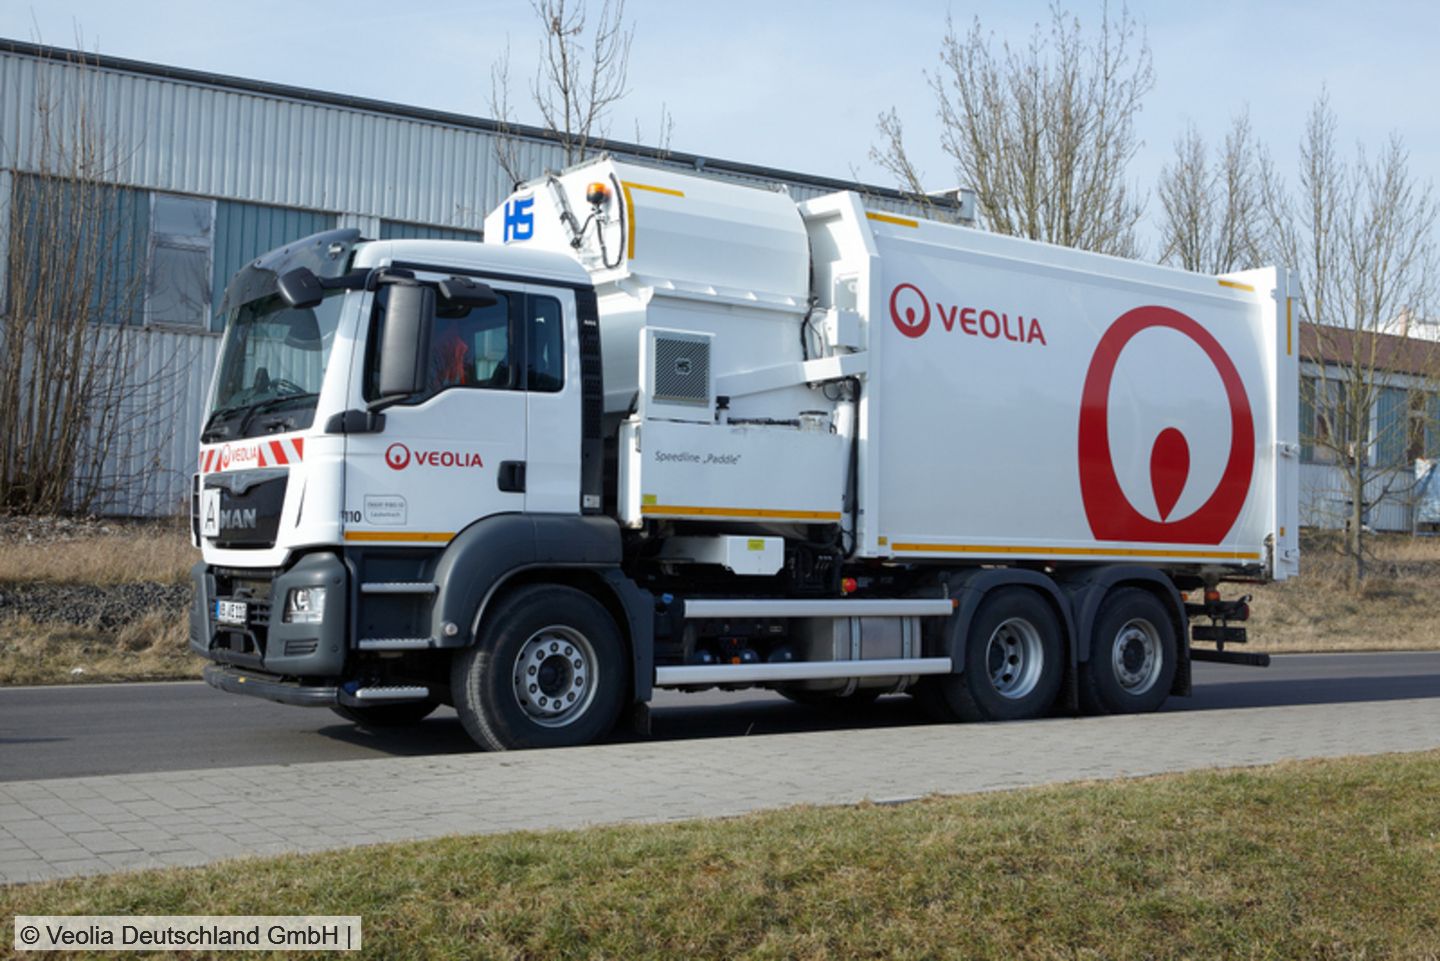 Veolia planning to sell western German waste entities